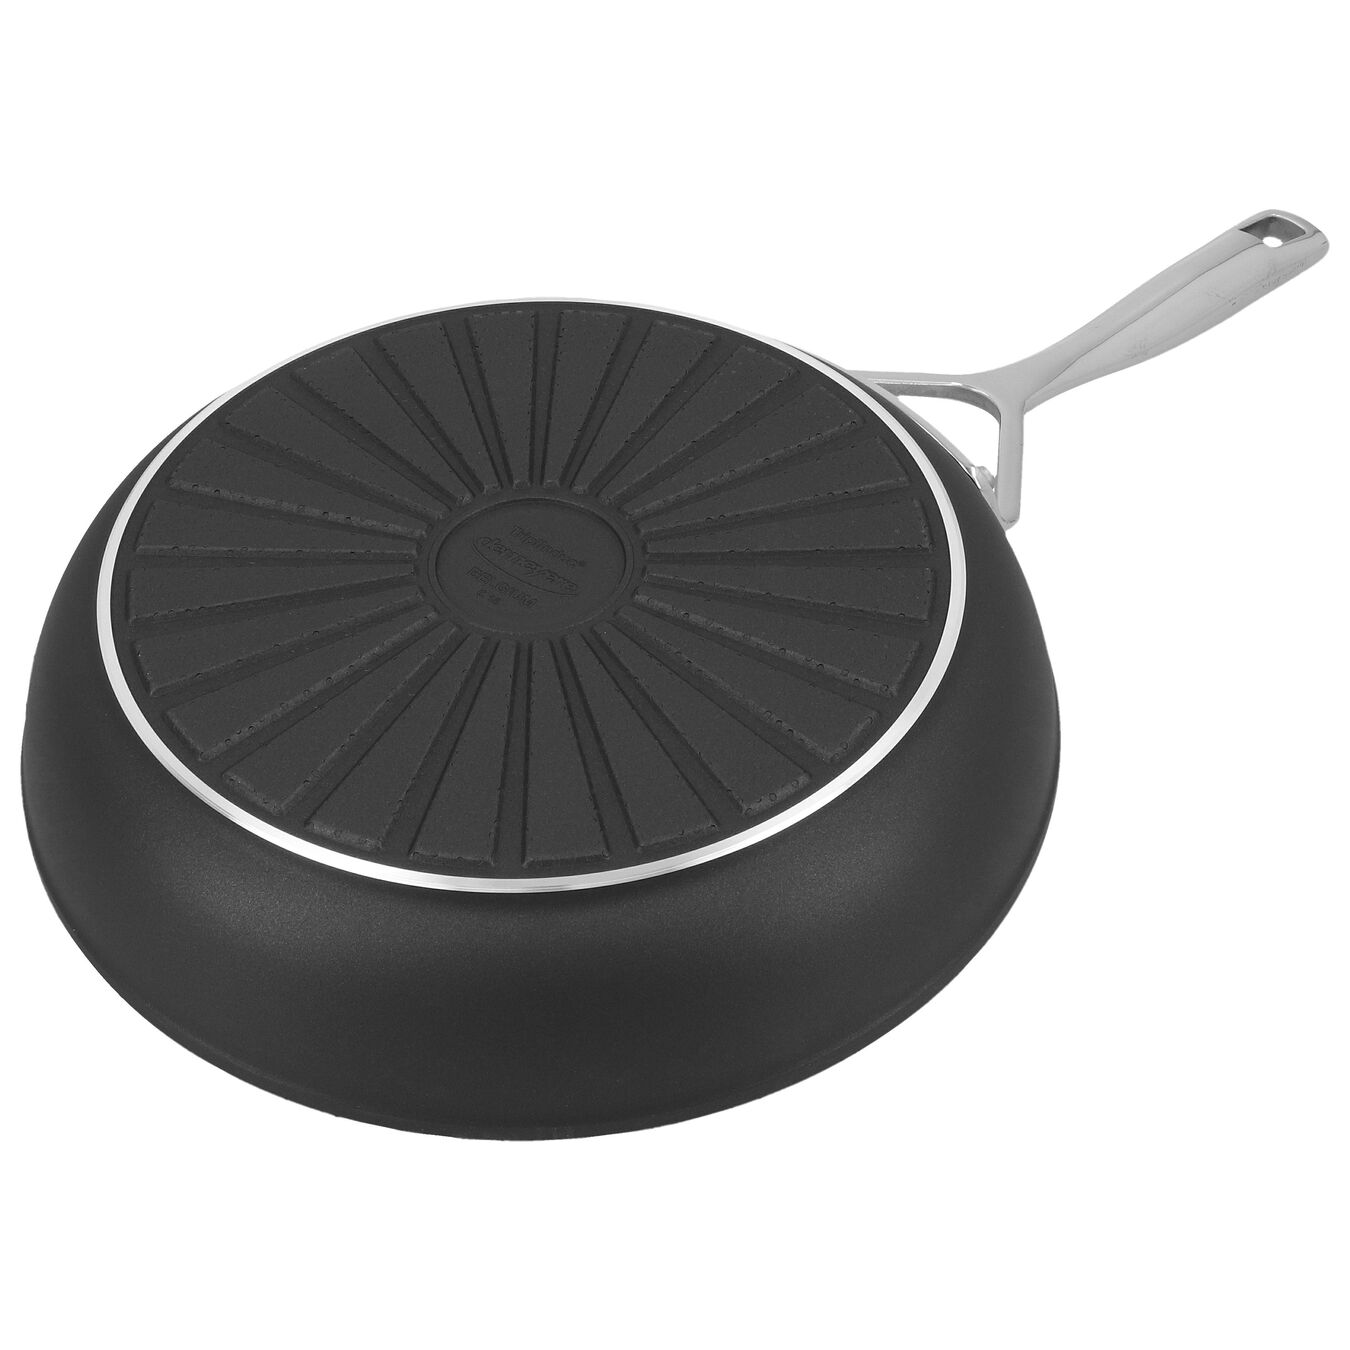 24 cm Aluminum Frying pan silver-black,,large 5